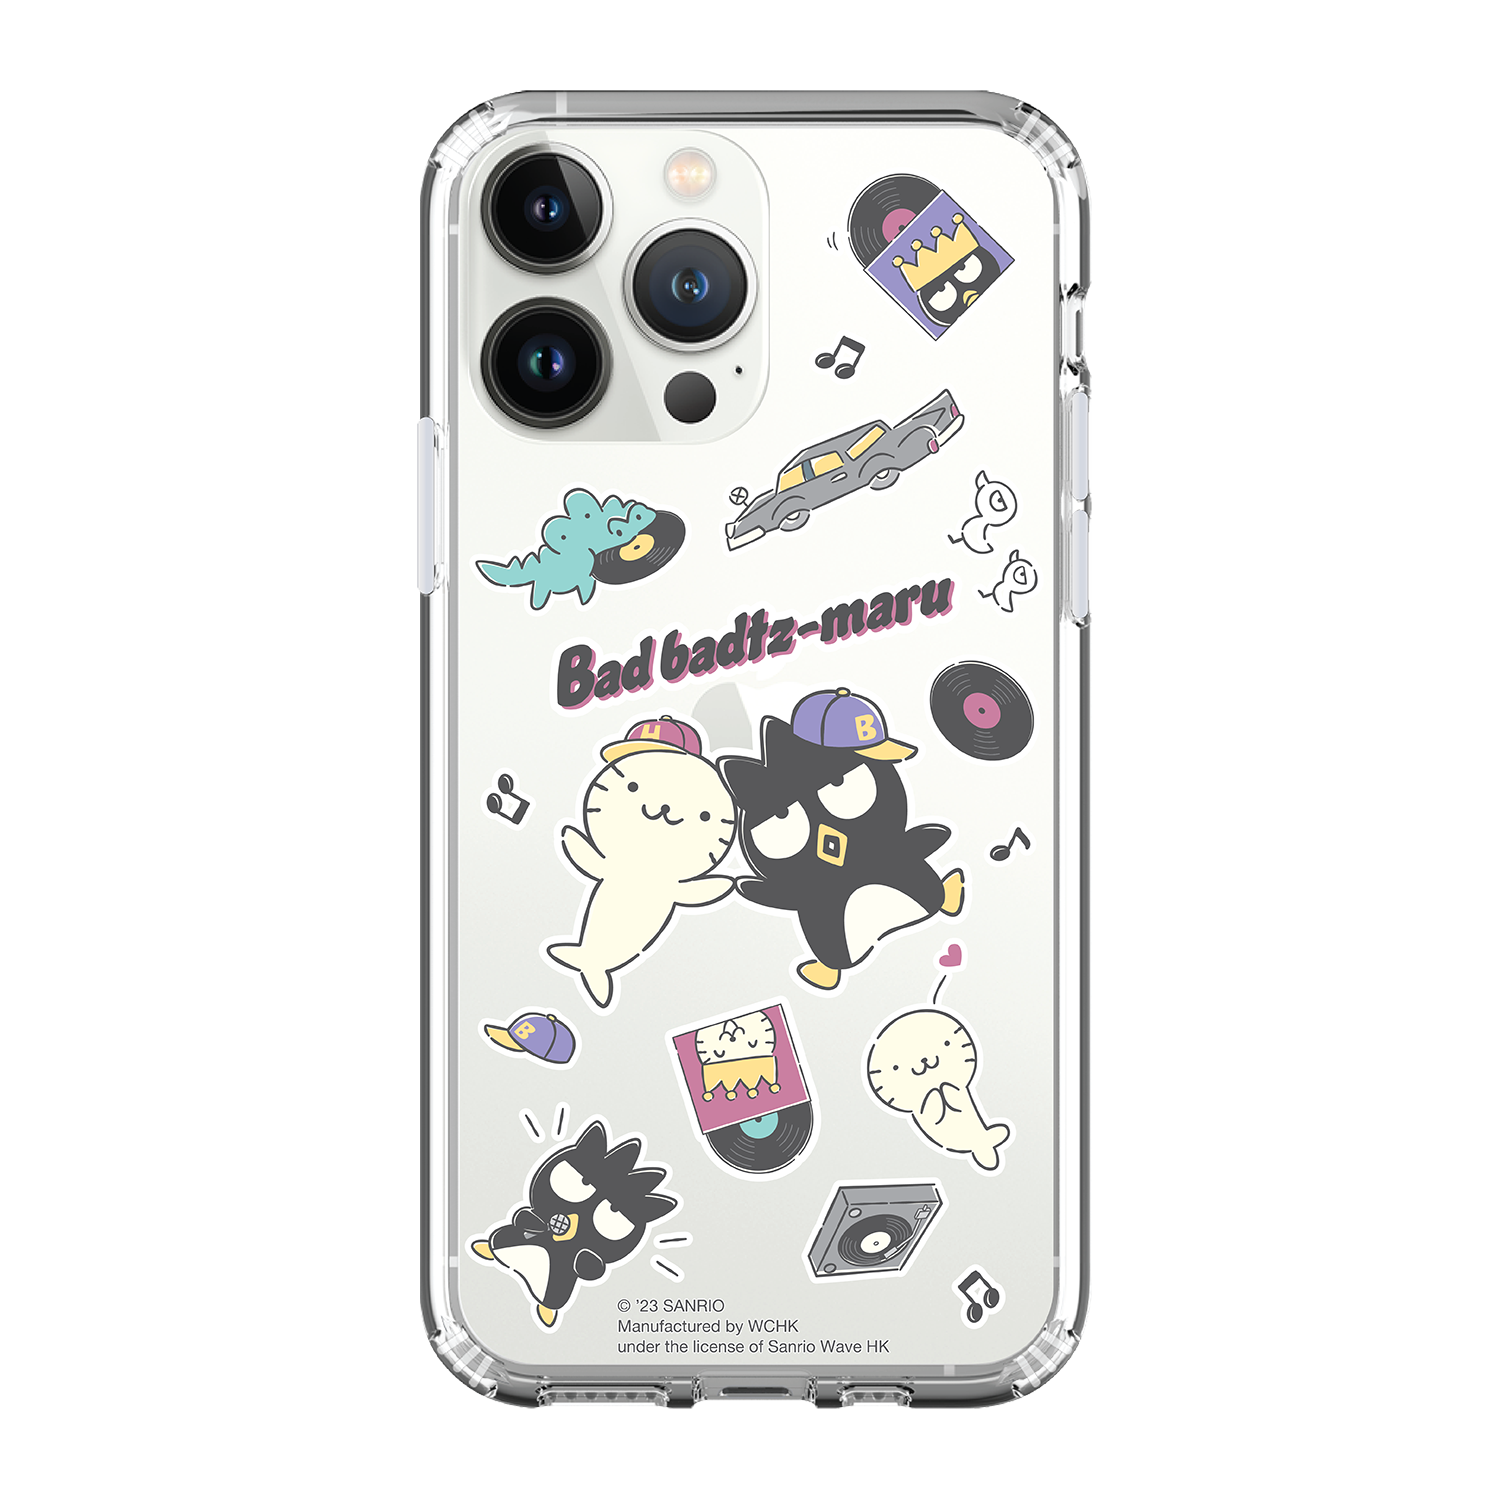 BadBadtz-Maru Clear Case / iPhone Case / Android Case / Samsung Case 防撞透明手機殼 (XO108)